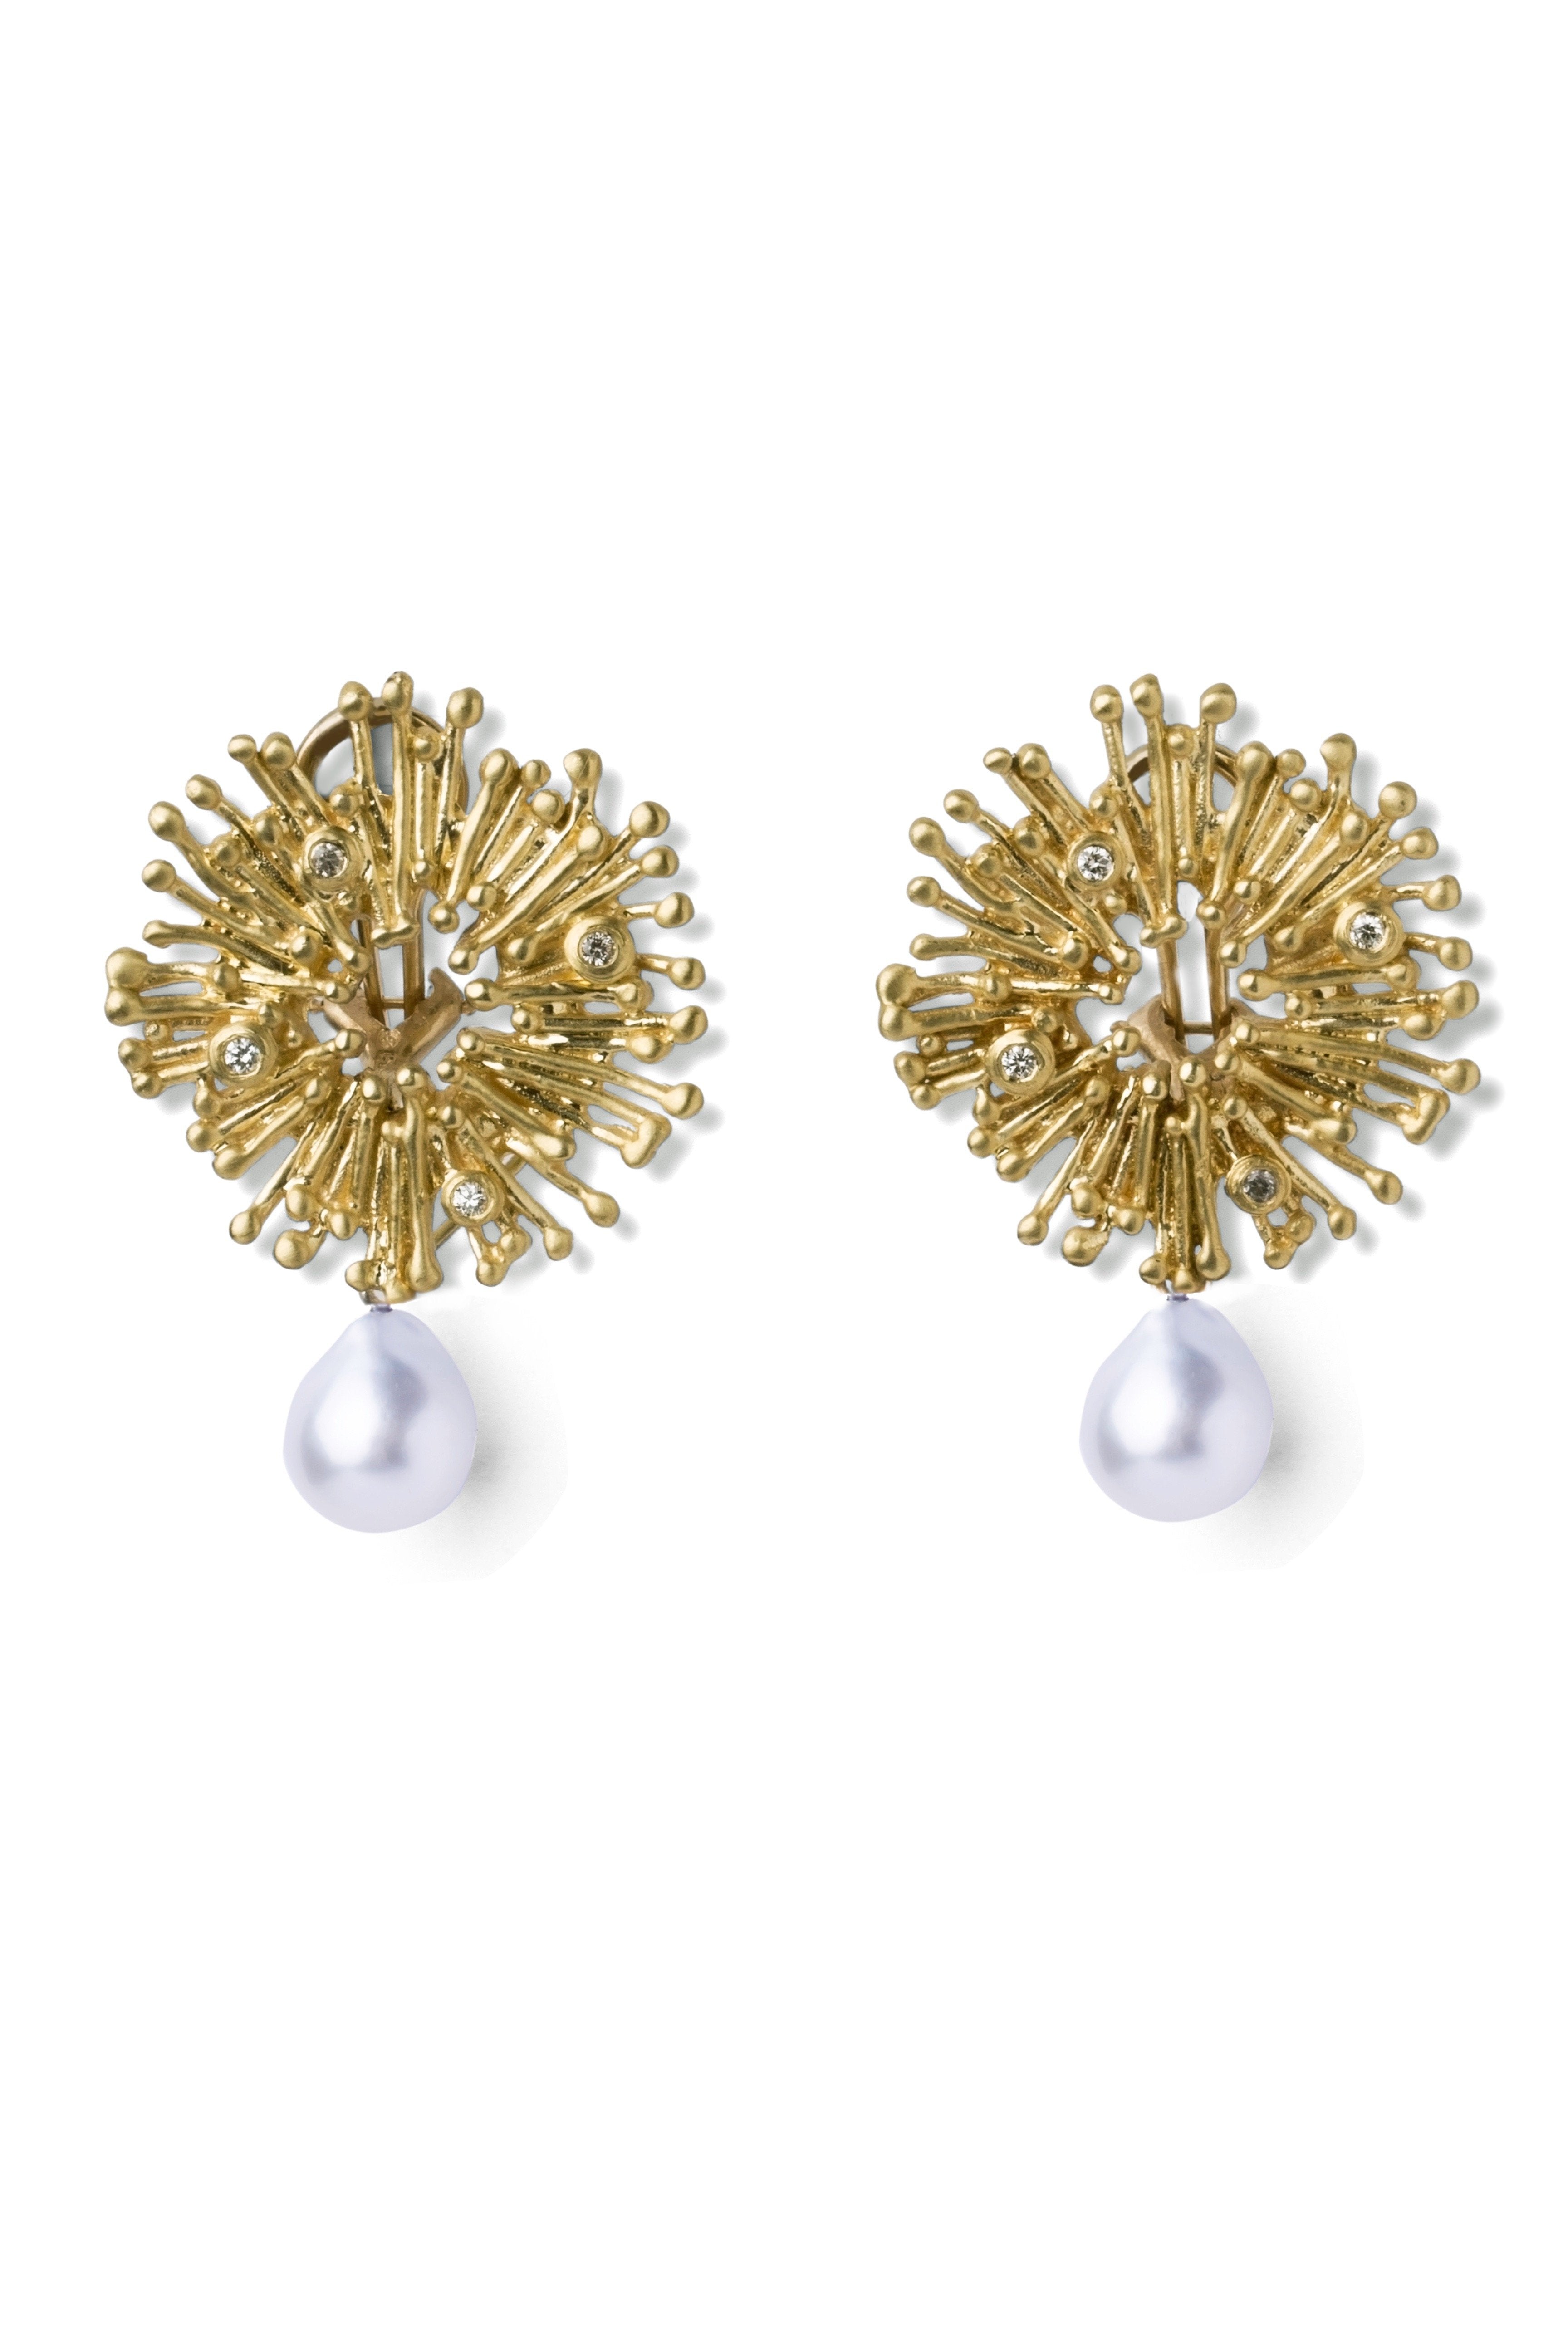 Diamond Sunburst Clip Earrings with Detachable South Sea Pearl Drops